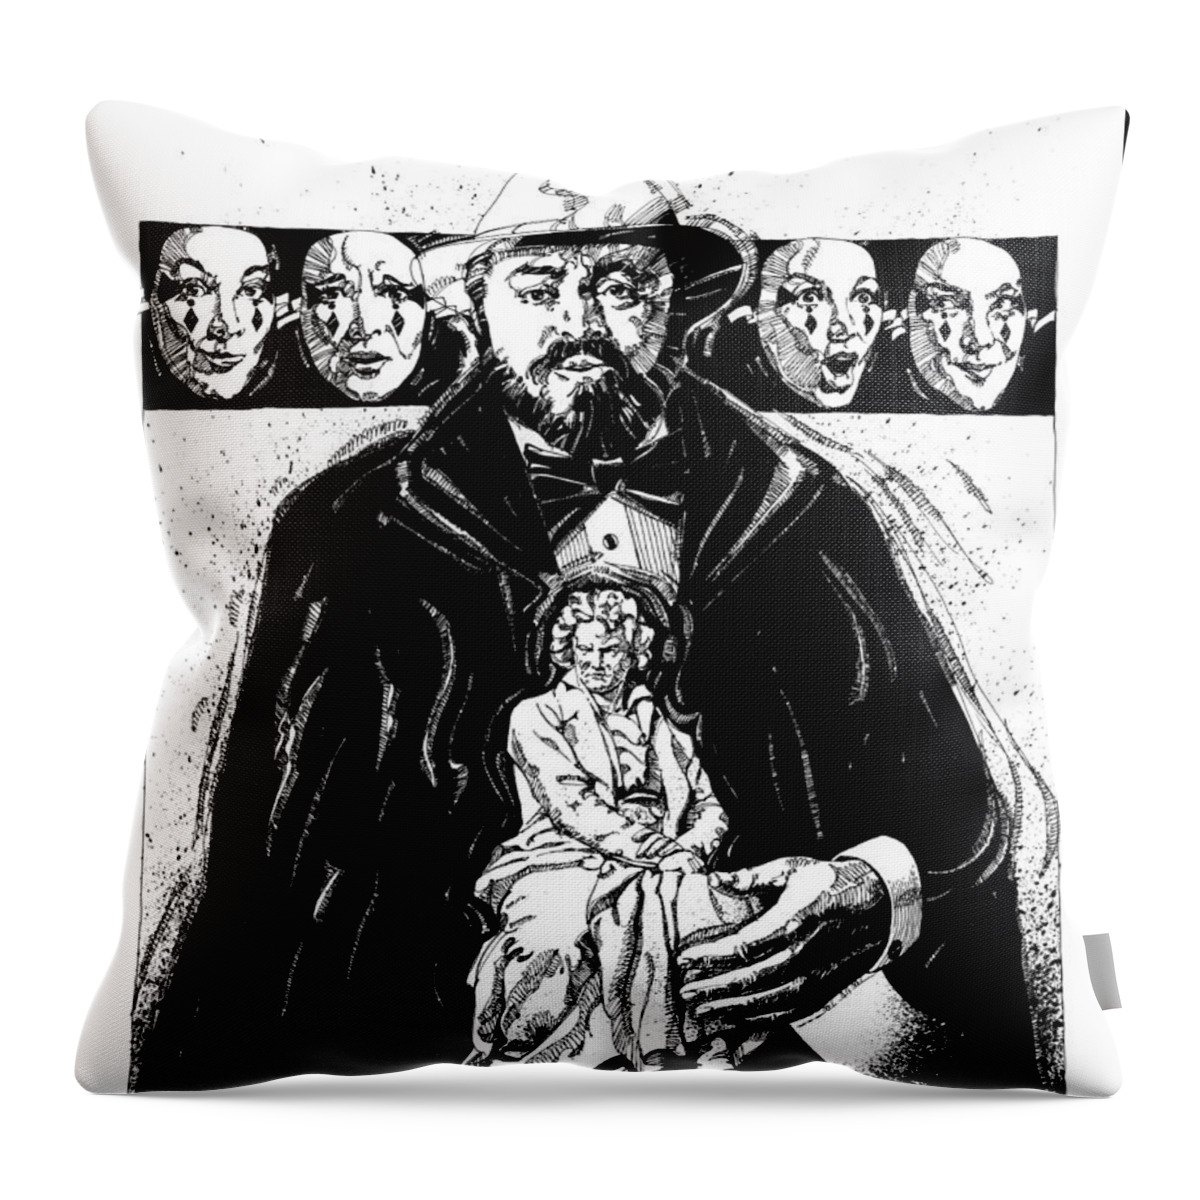 Pavarotti Throw Pillow featuring the drawing Pavarotti, Fidelio, inking #1 by Garth Glazier